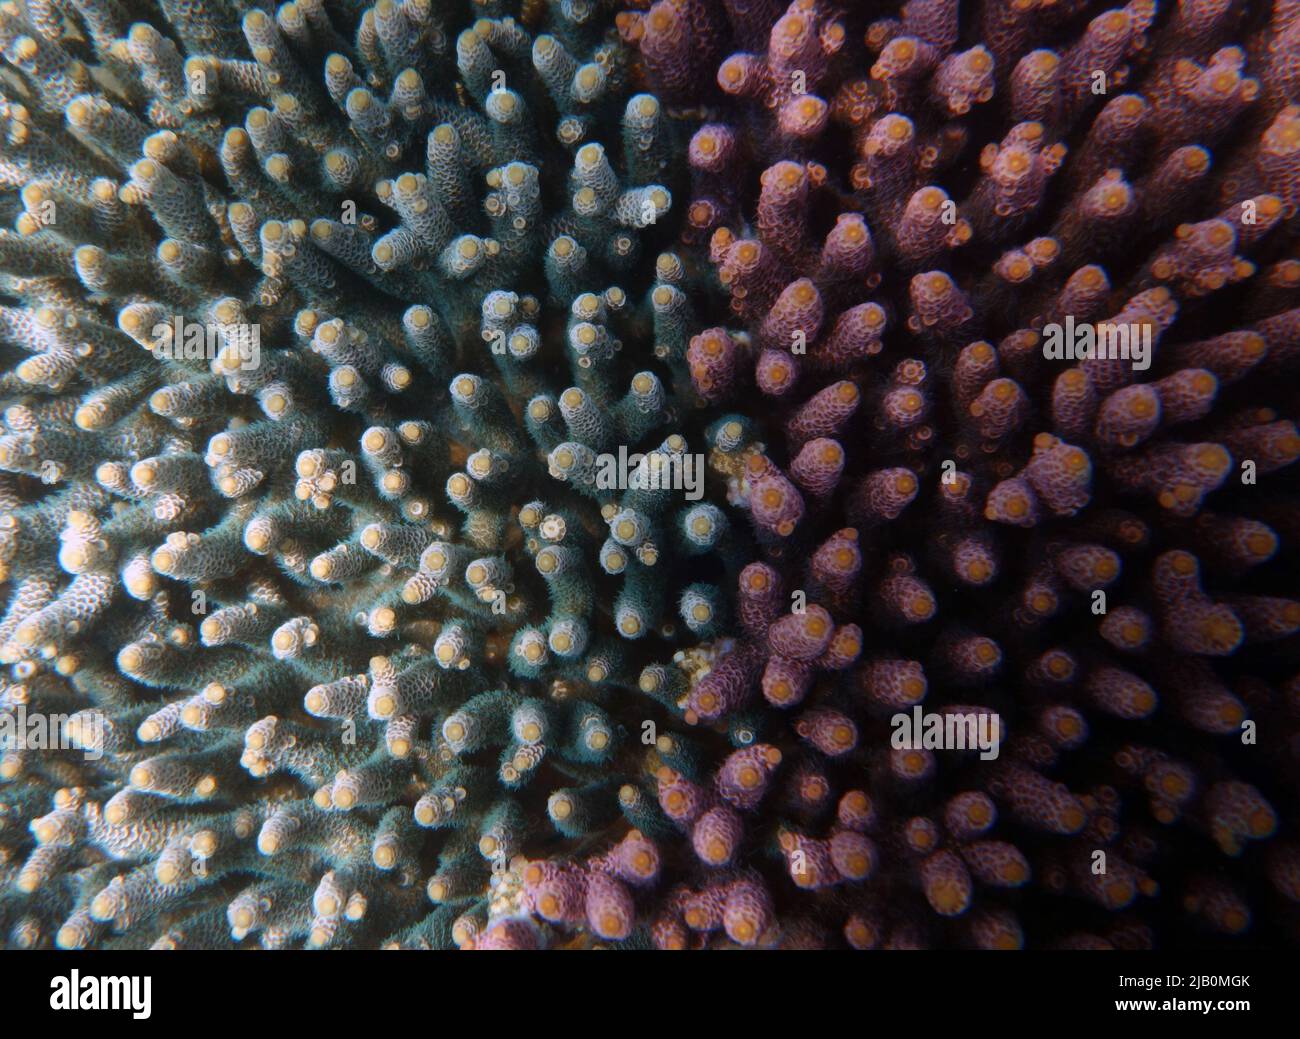 Chimera-Kolonie zweier verschiedener konspezifischer Acropora, Fitzroy Island, Great Barrier Reef, Queensland, Australien Stockfoto